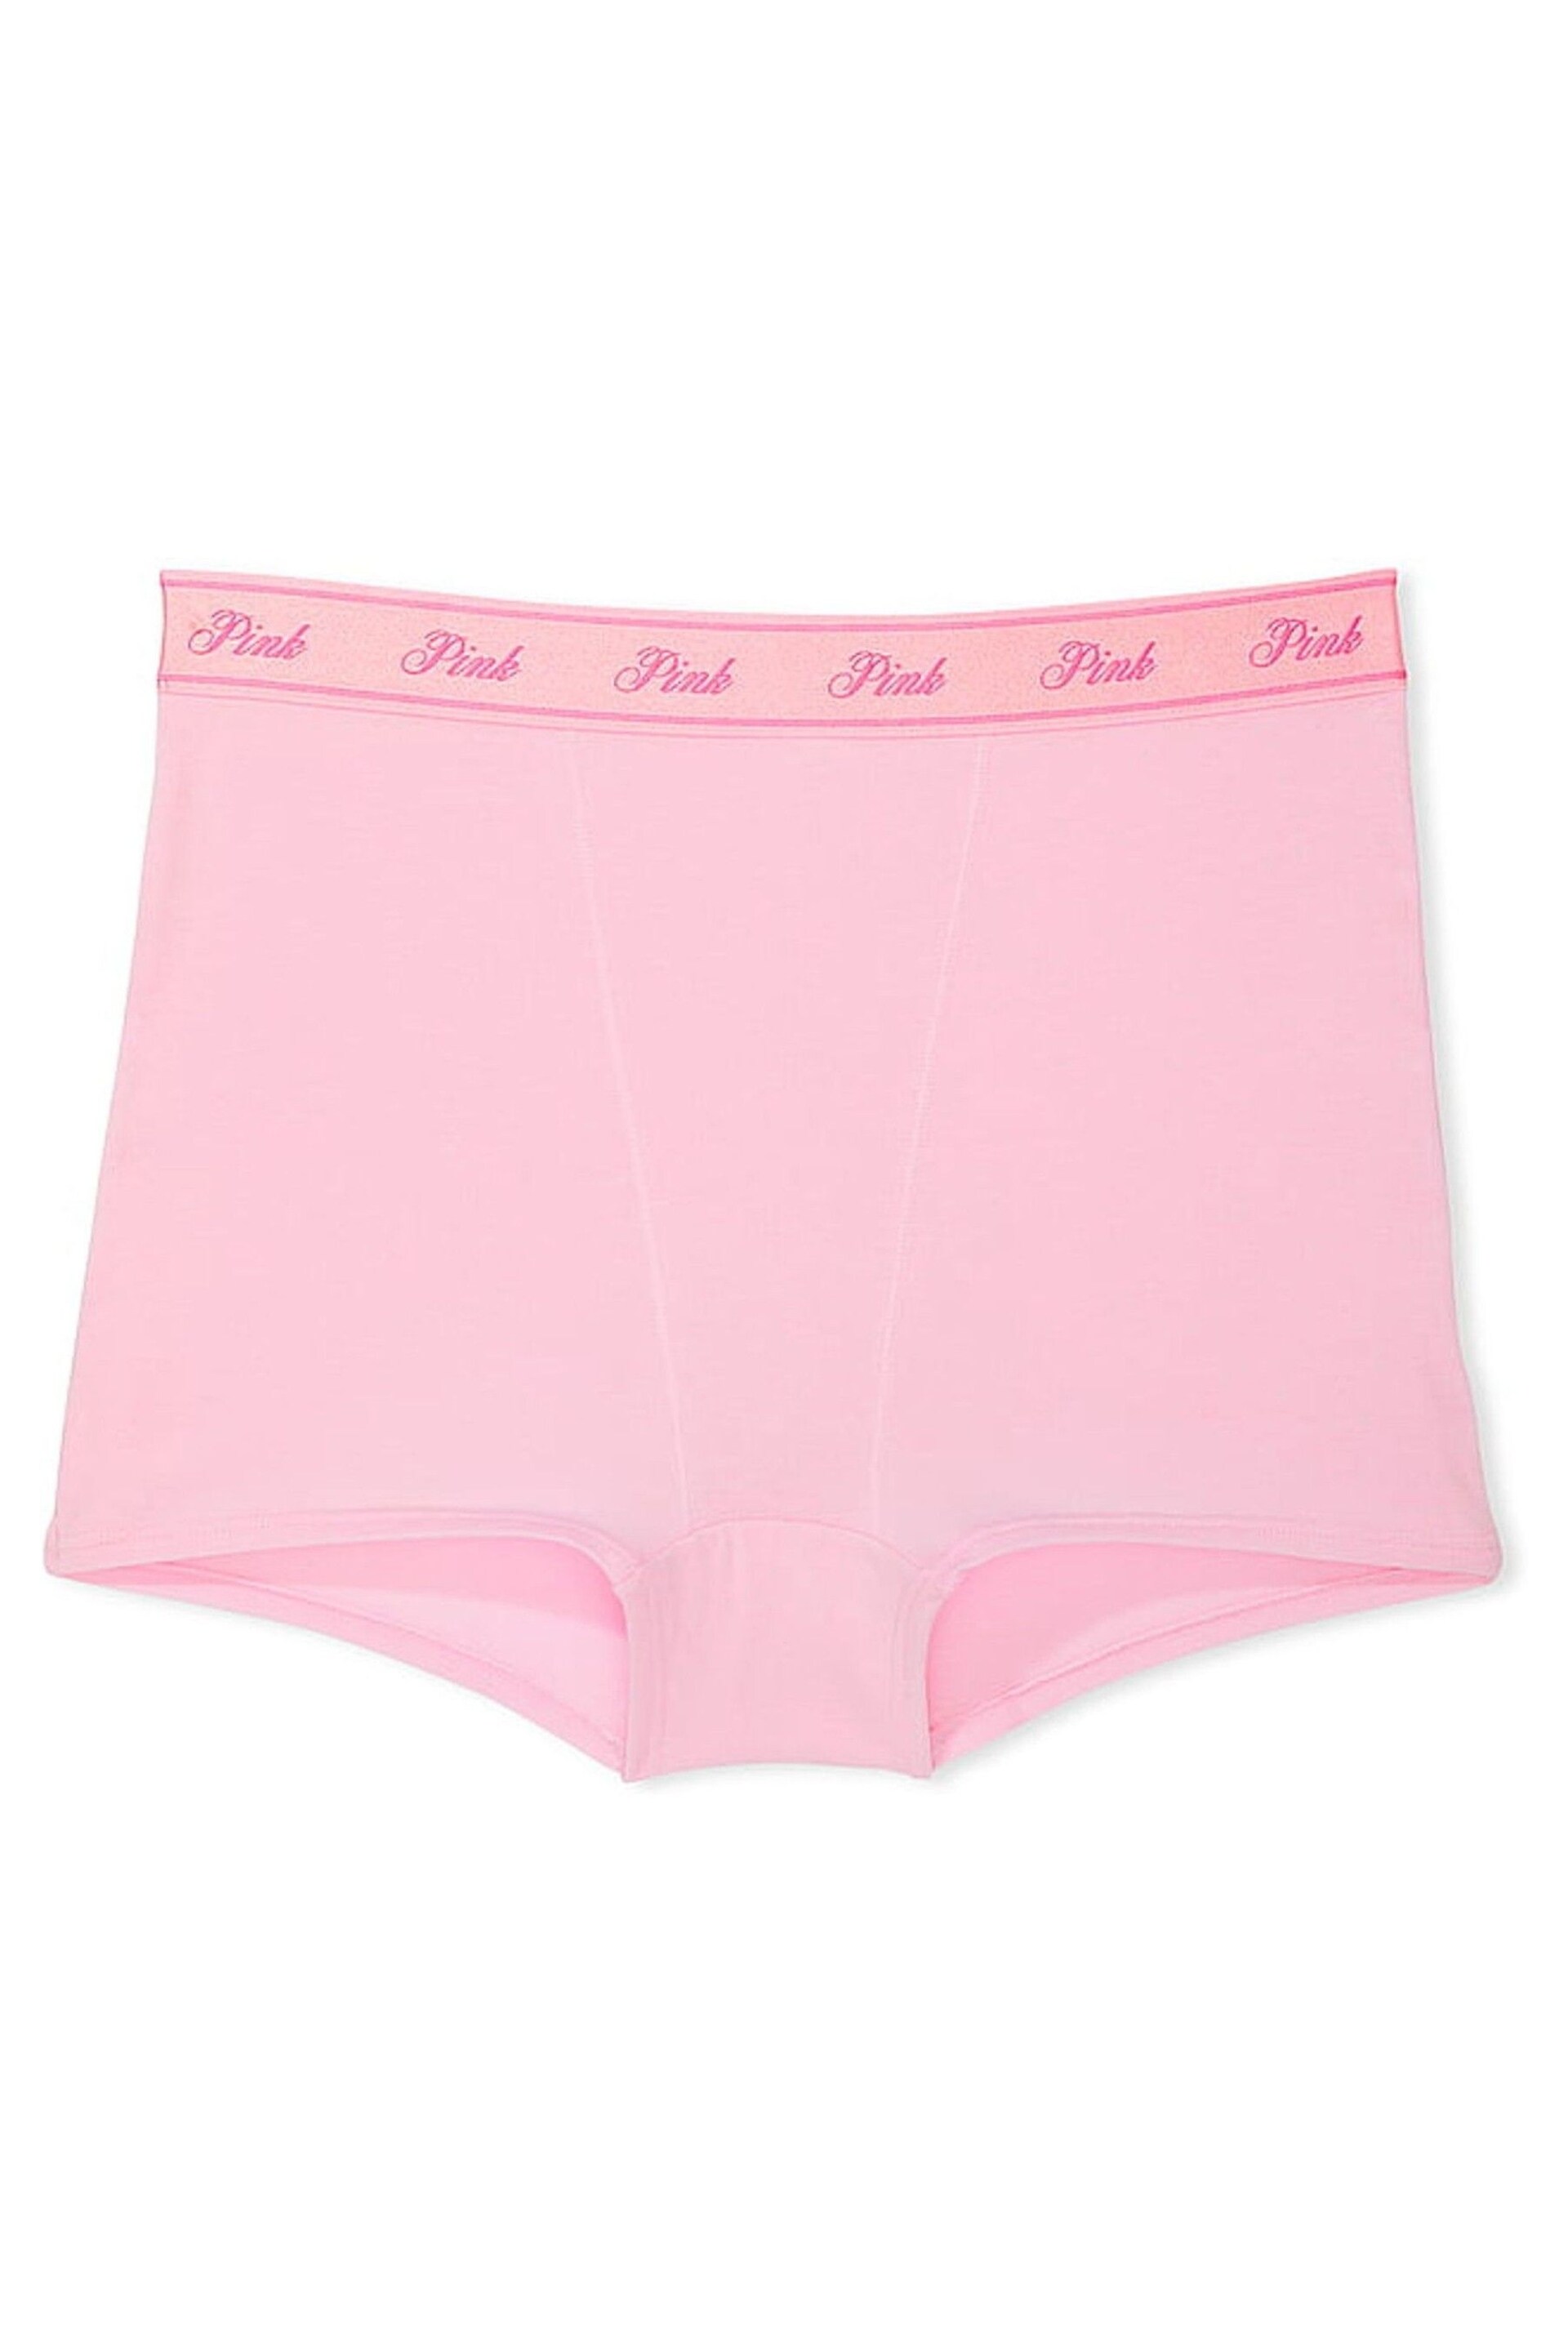 Victoria's Secret PINK Pink Bubble Cotton Logo High Waist Boyshort Knickers - Image 3 of 3